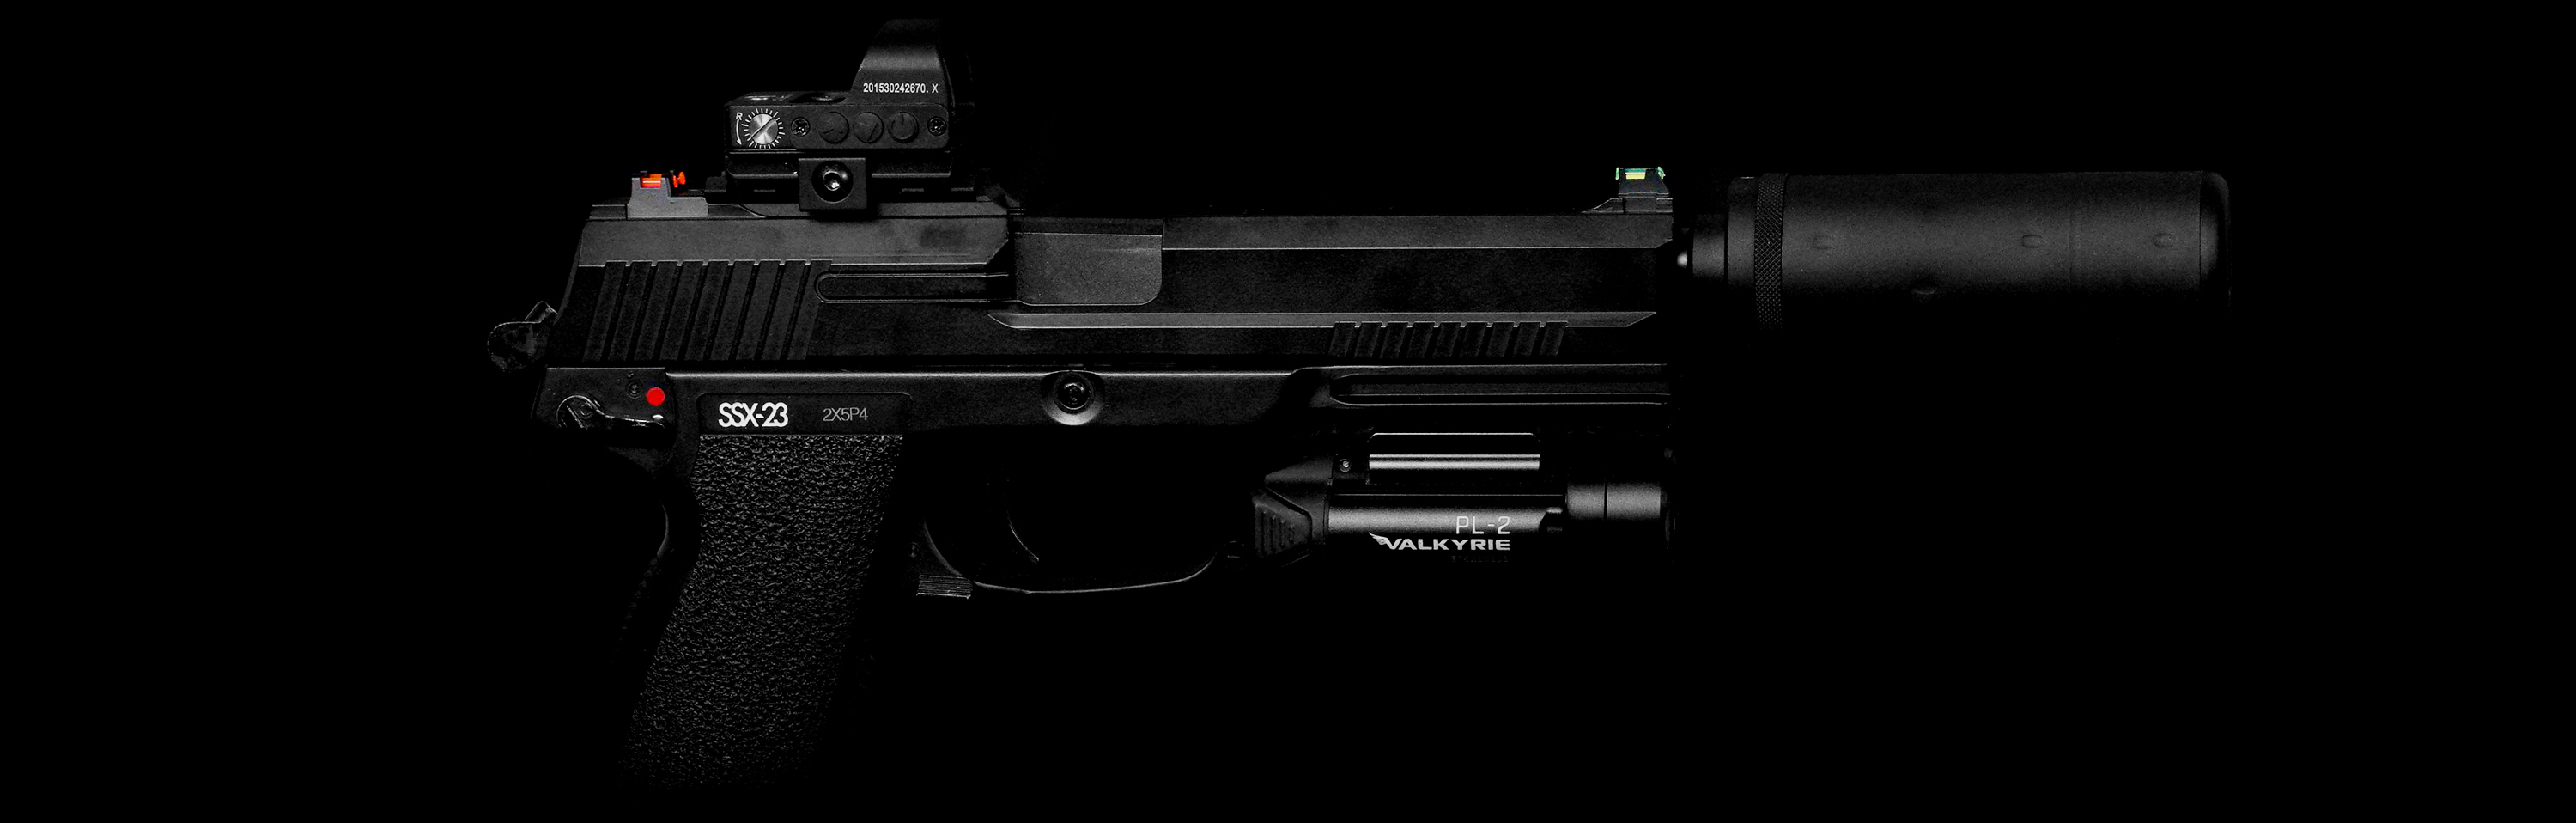 SSX23 Airsoft Pistol v2020 - Novritsch